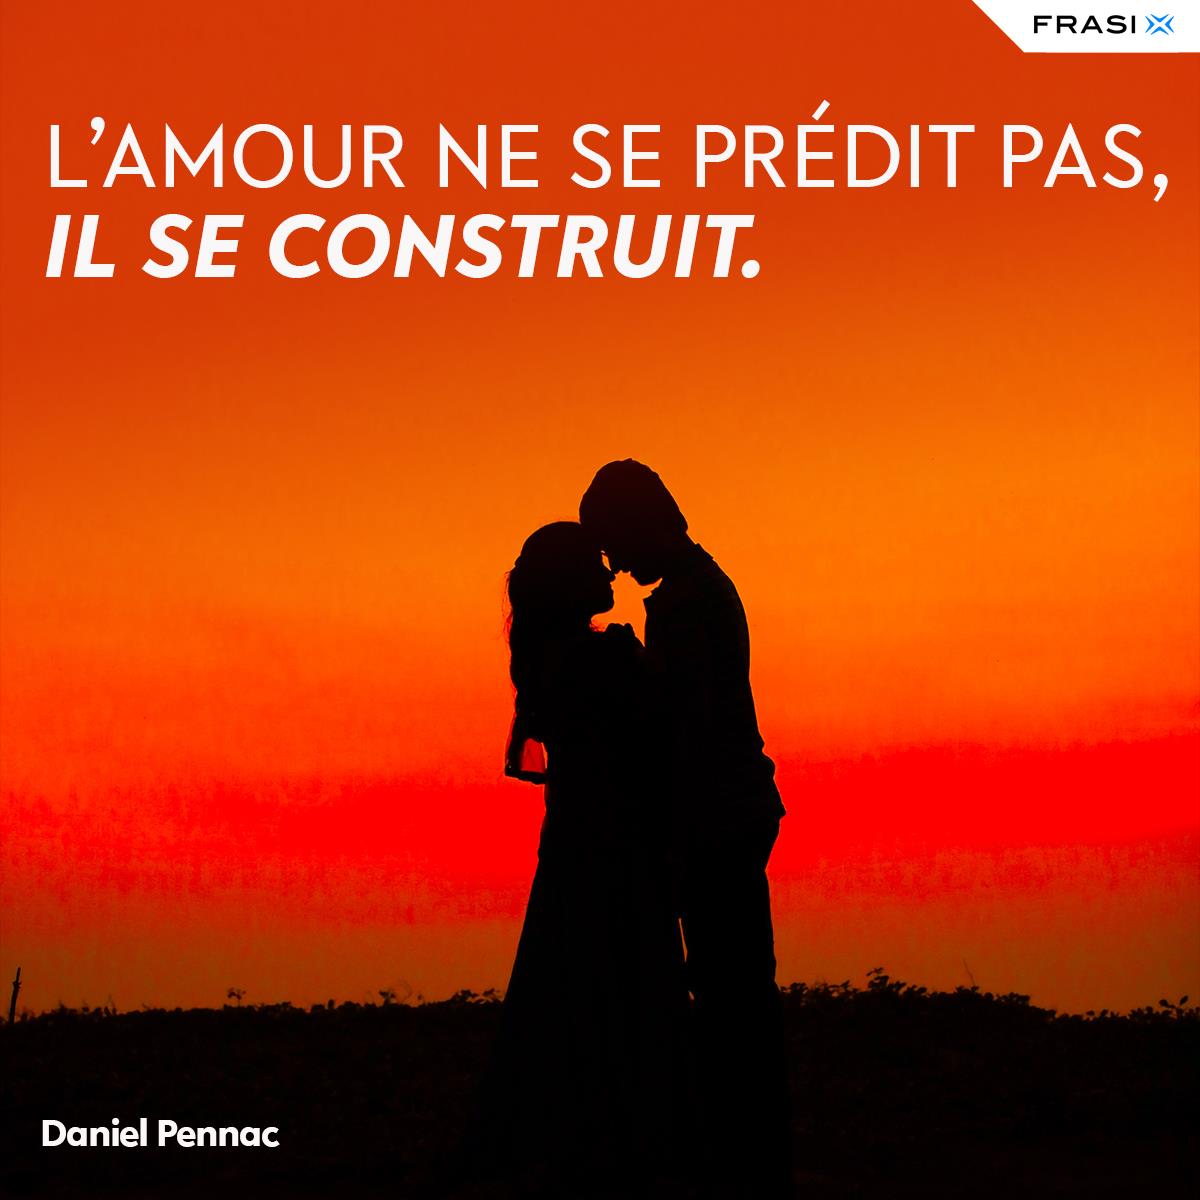 Frasi d'amore brevi in francese Daniel Pennac